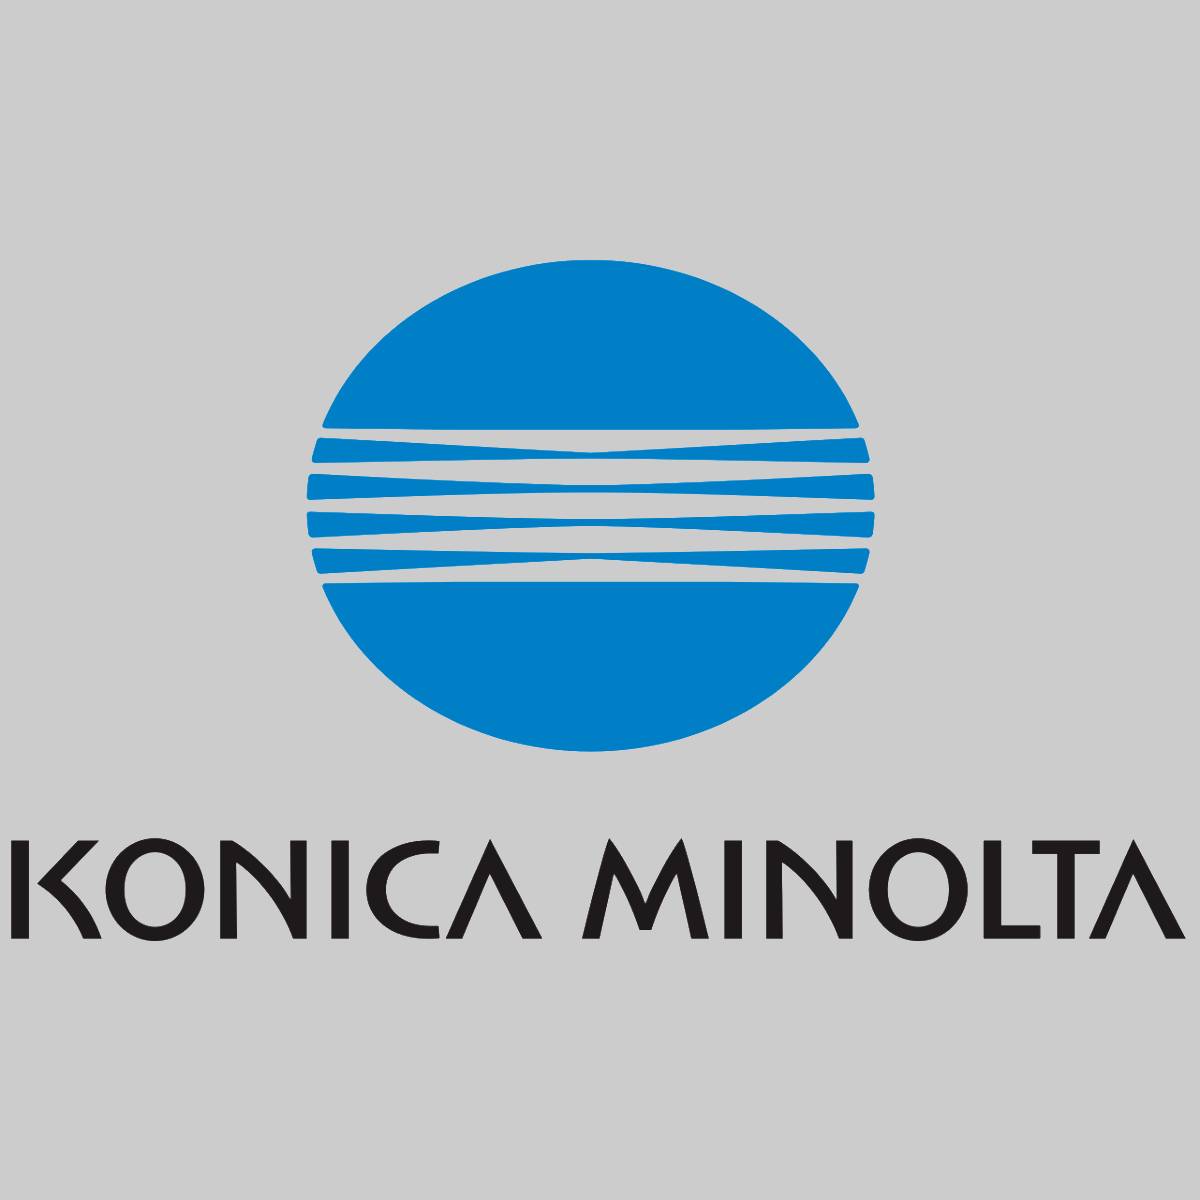 "Original Konica Minolta Toner Cartridge Cyan 8937-922 CF 2002 CF 3102 CF 3101